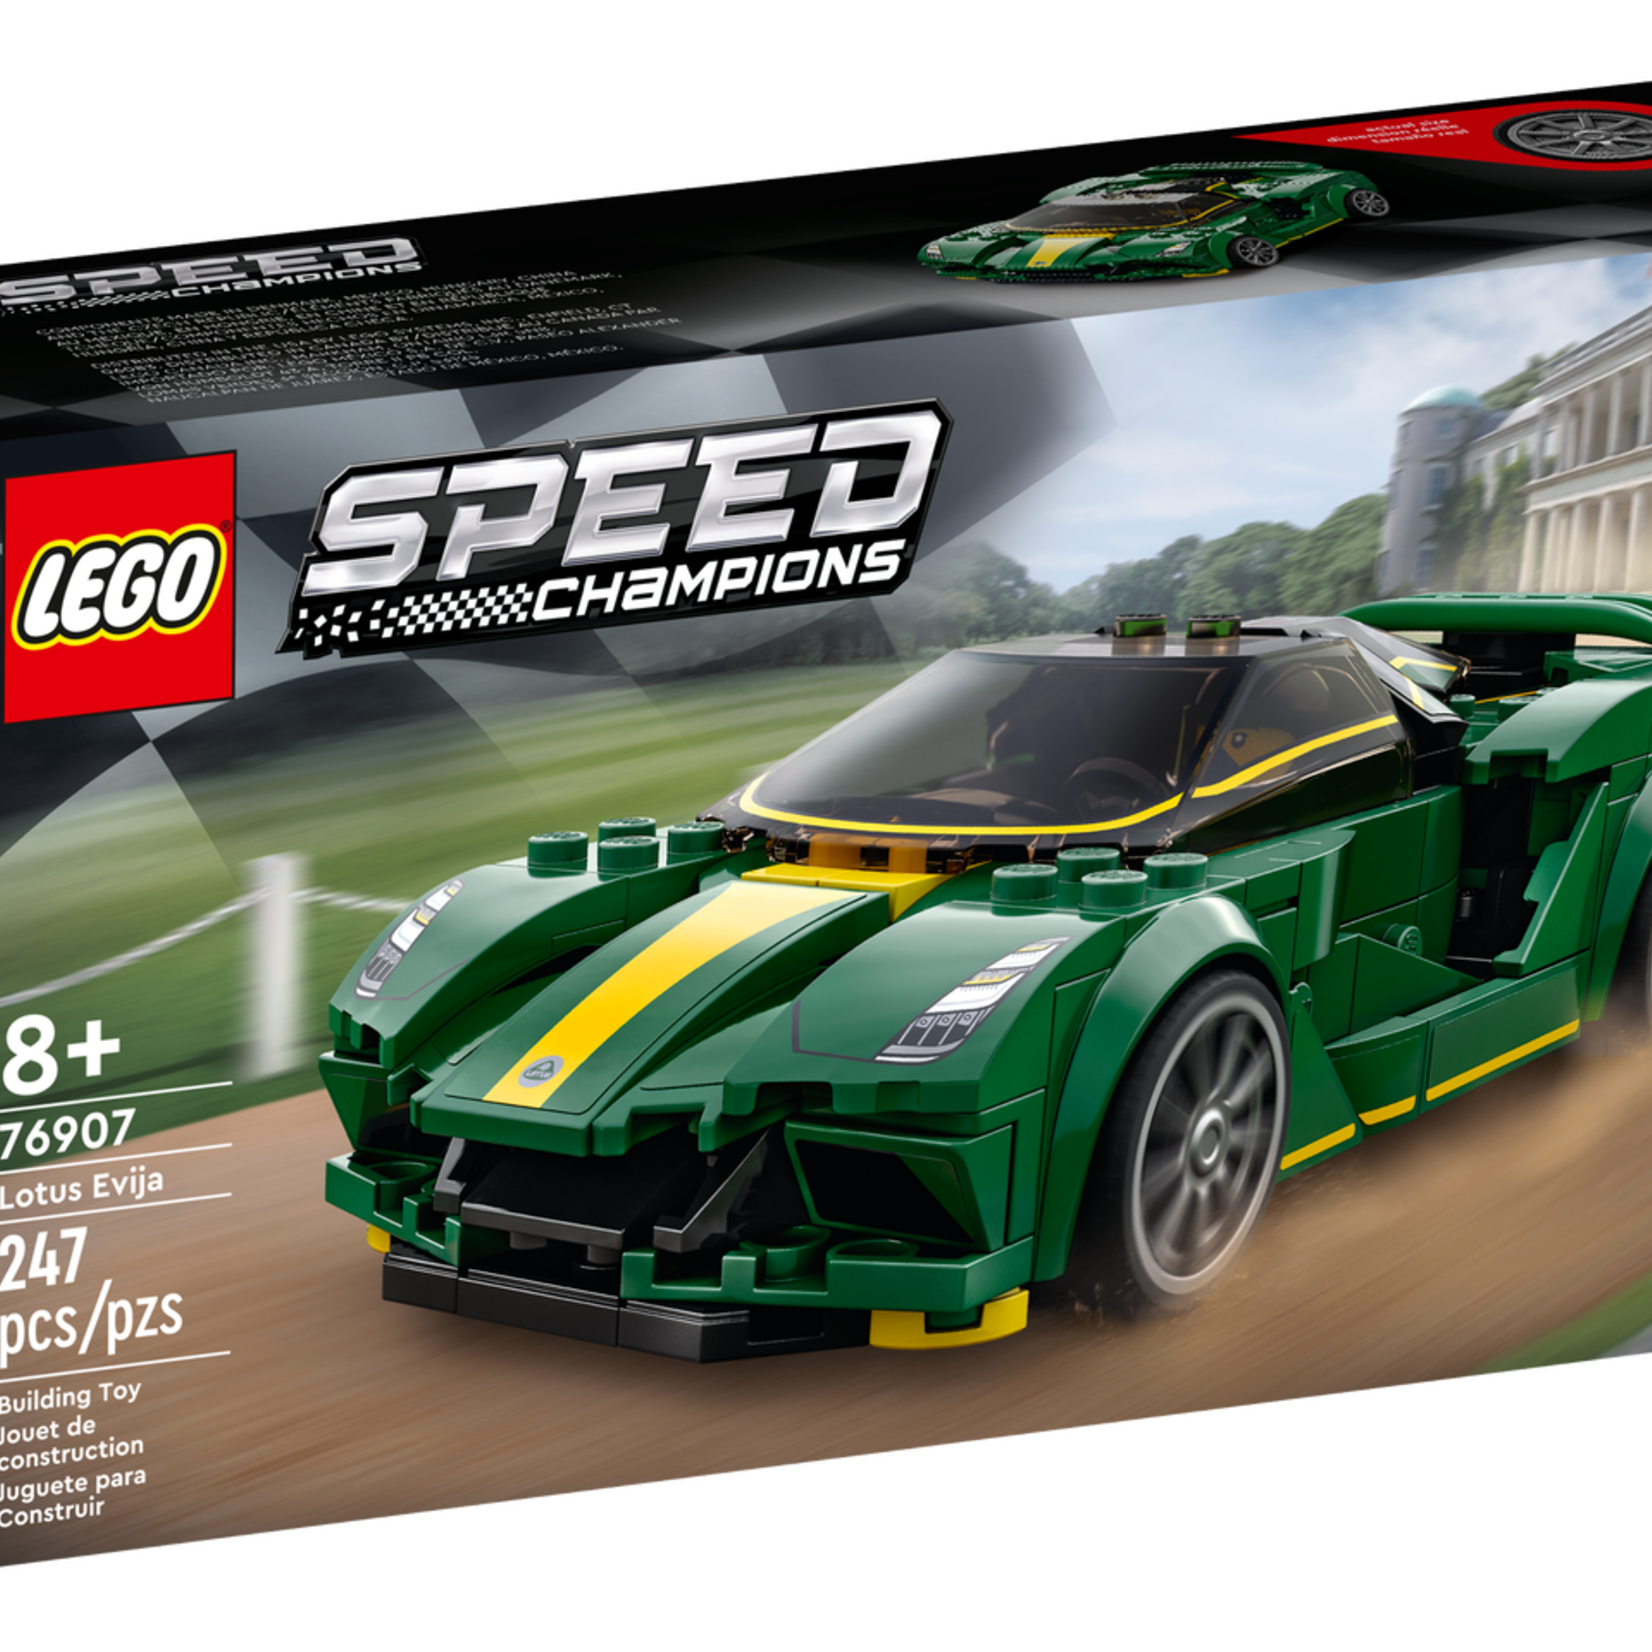 Lego Lego 76907 Speed Champions - Lotus Evija